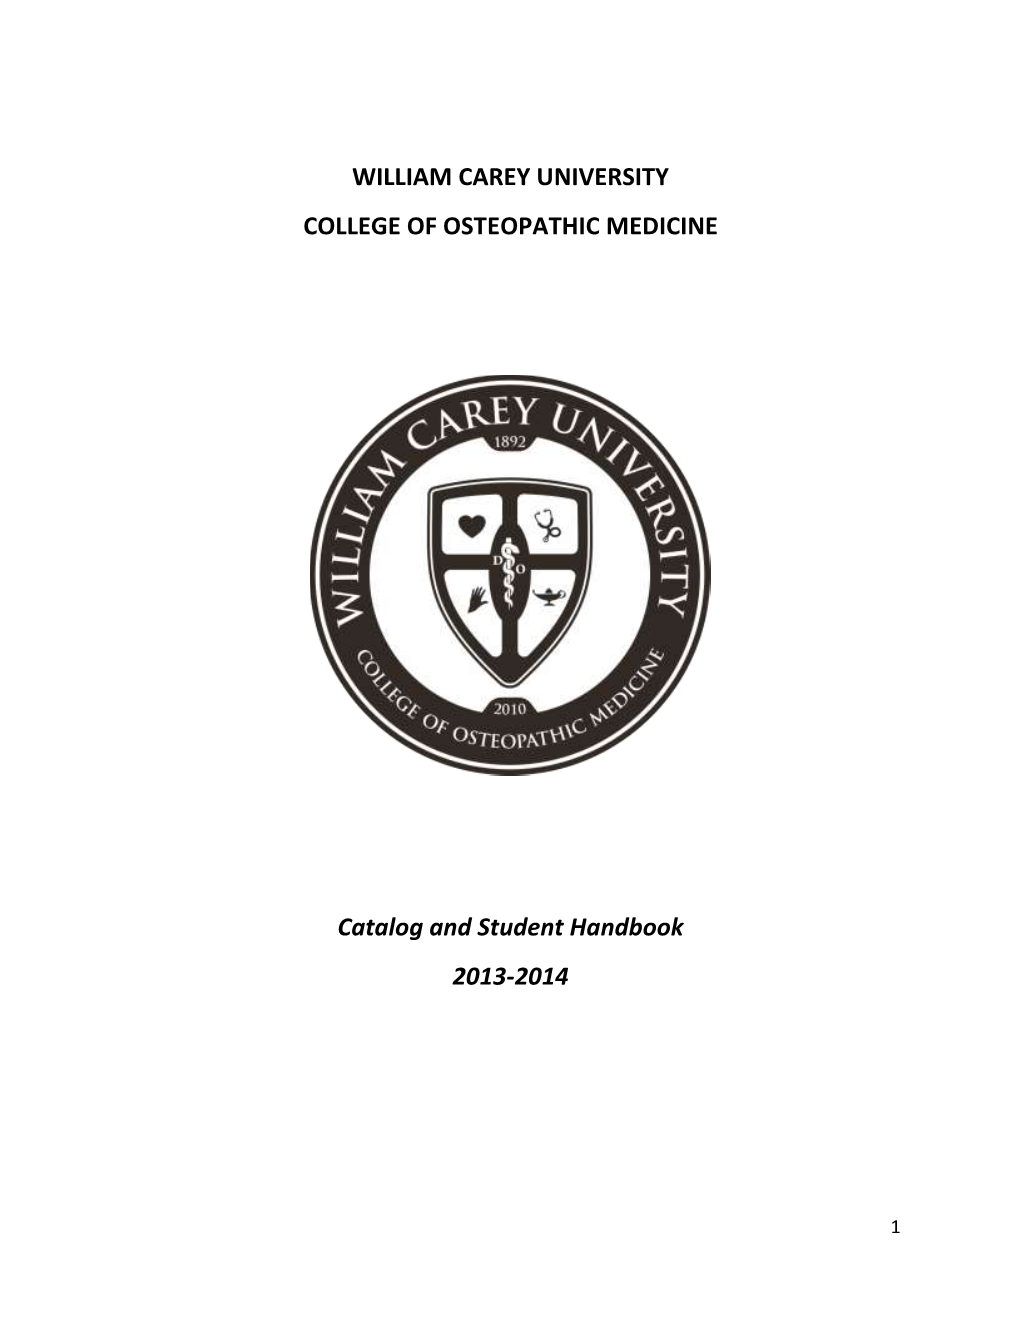 WILLIAM CAREY UNIVERSITY COLLEGE of OSTEOPATHIC MEDICINE Catalog and Student Handbook 2013-2014